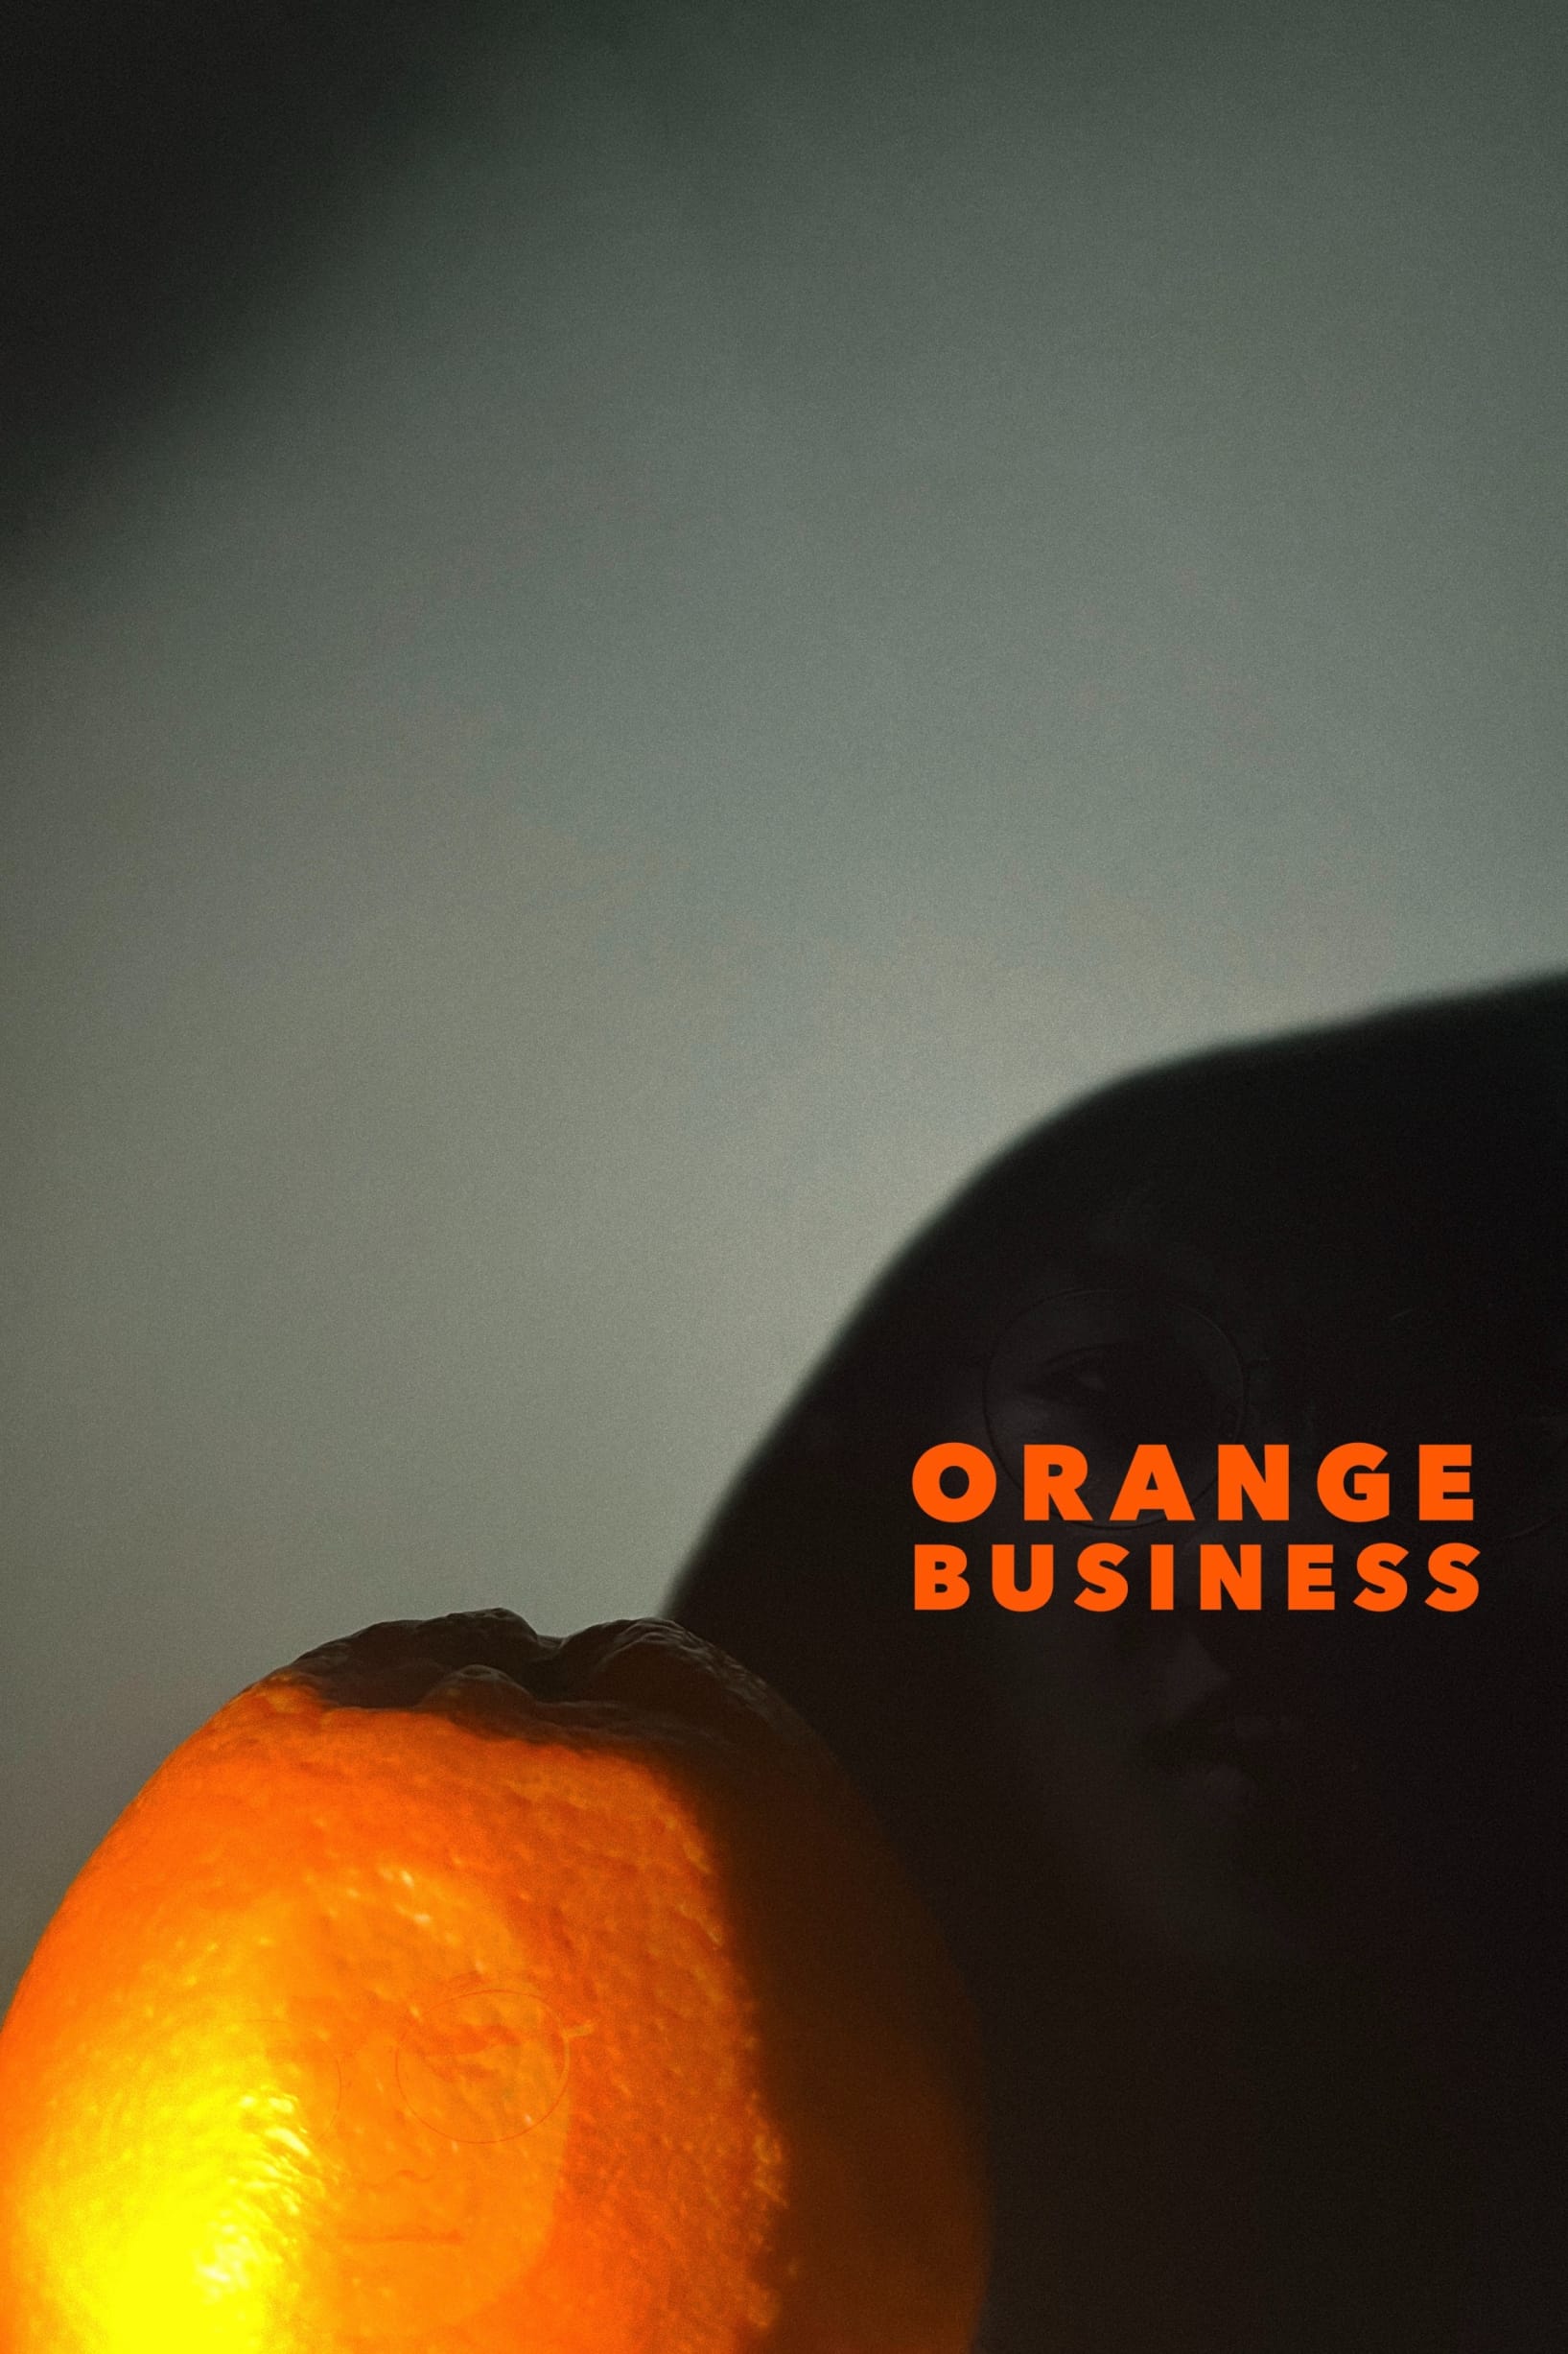 Orange Business